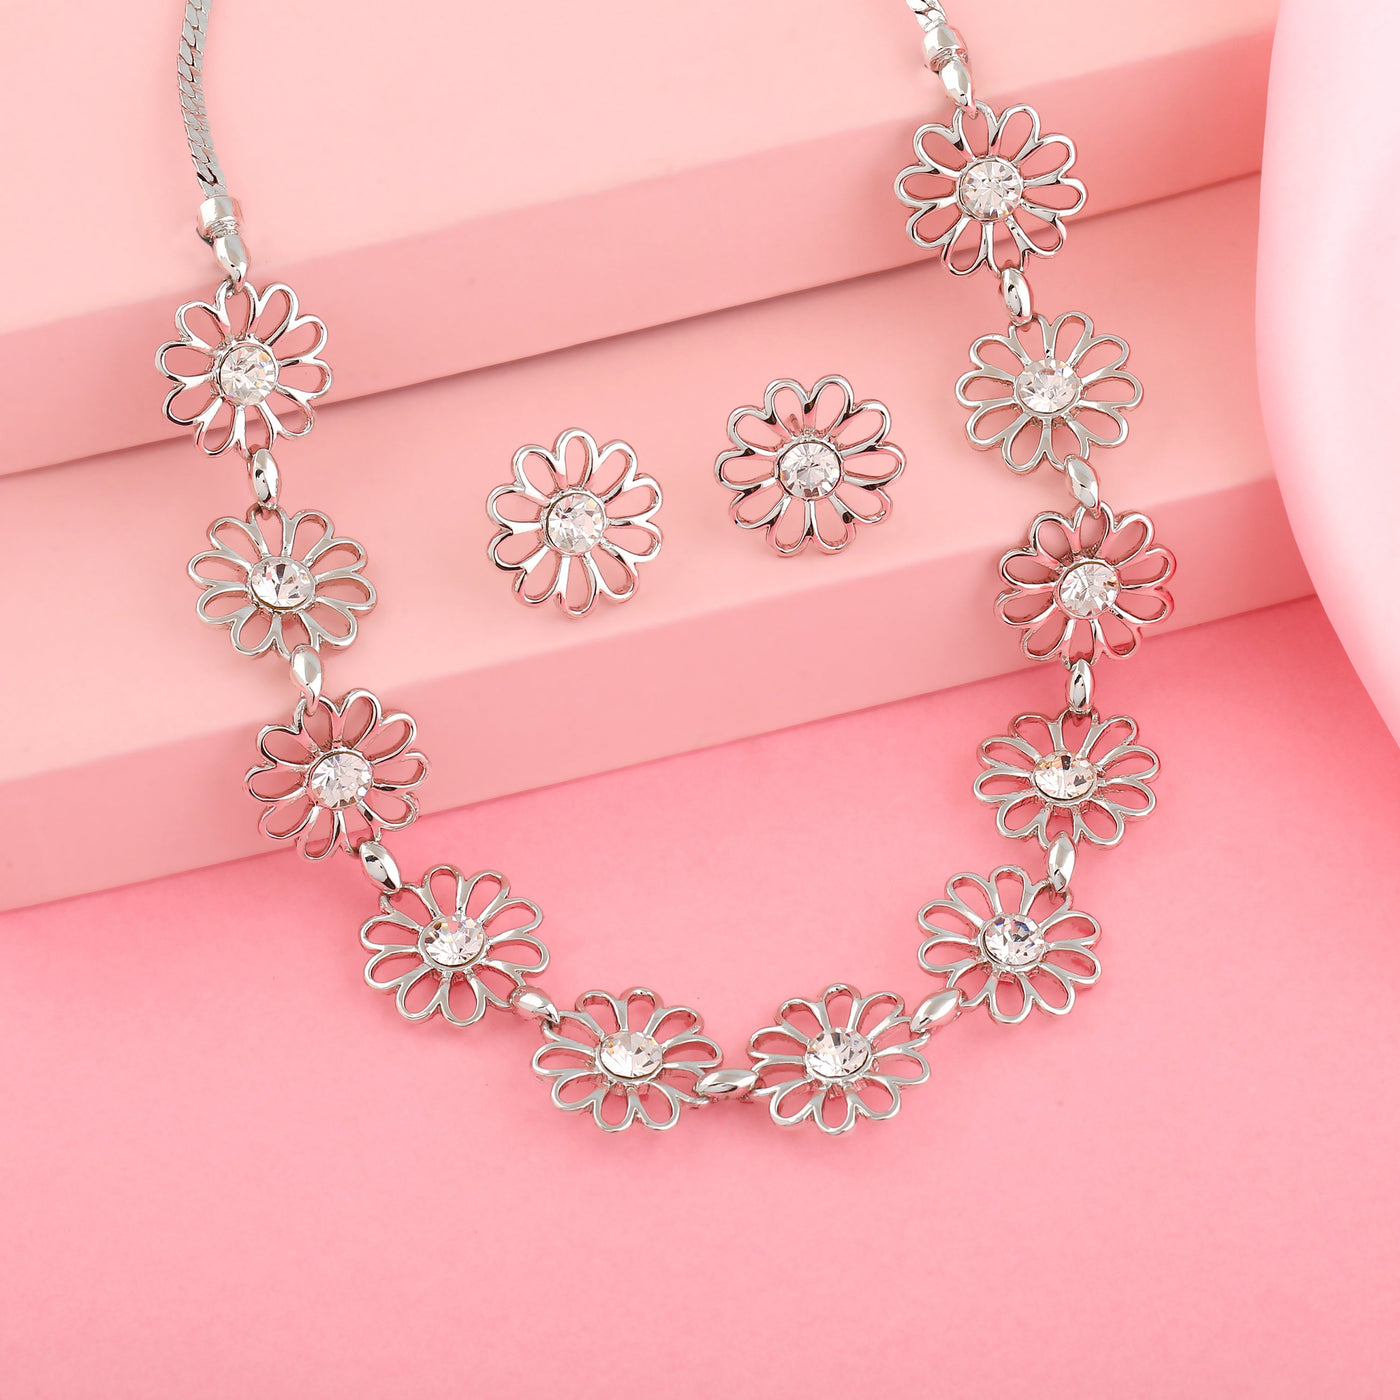 Estele Rhodium Plated Flower Designer Necklace Set with Crystals for Women